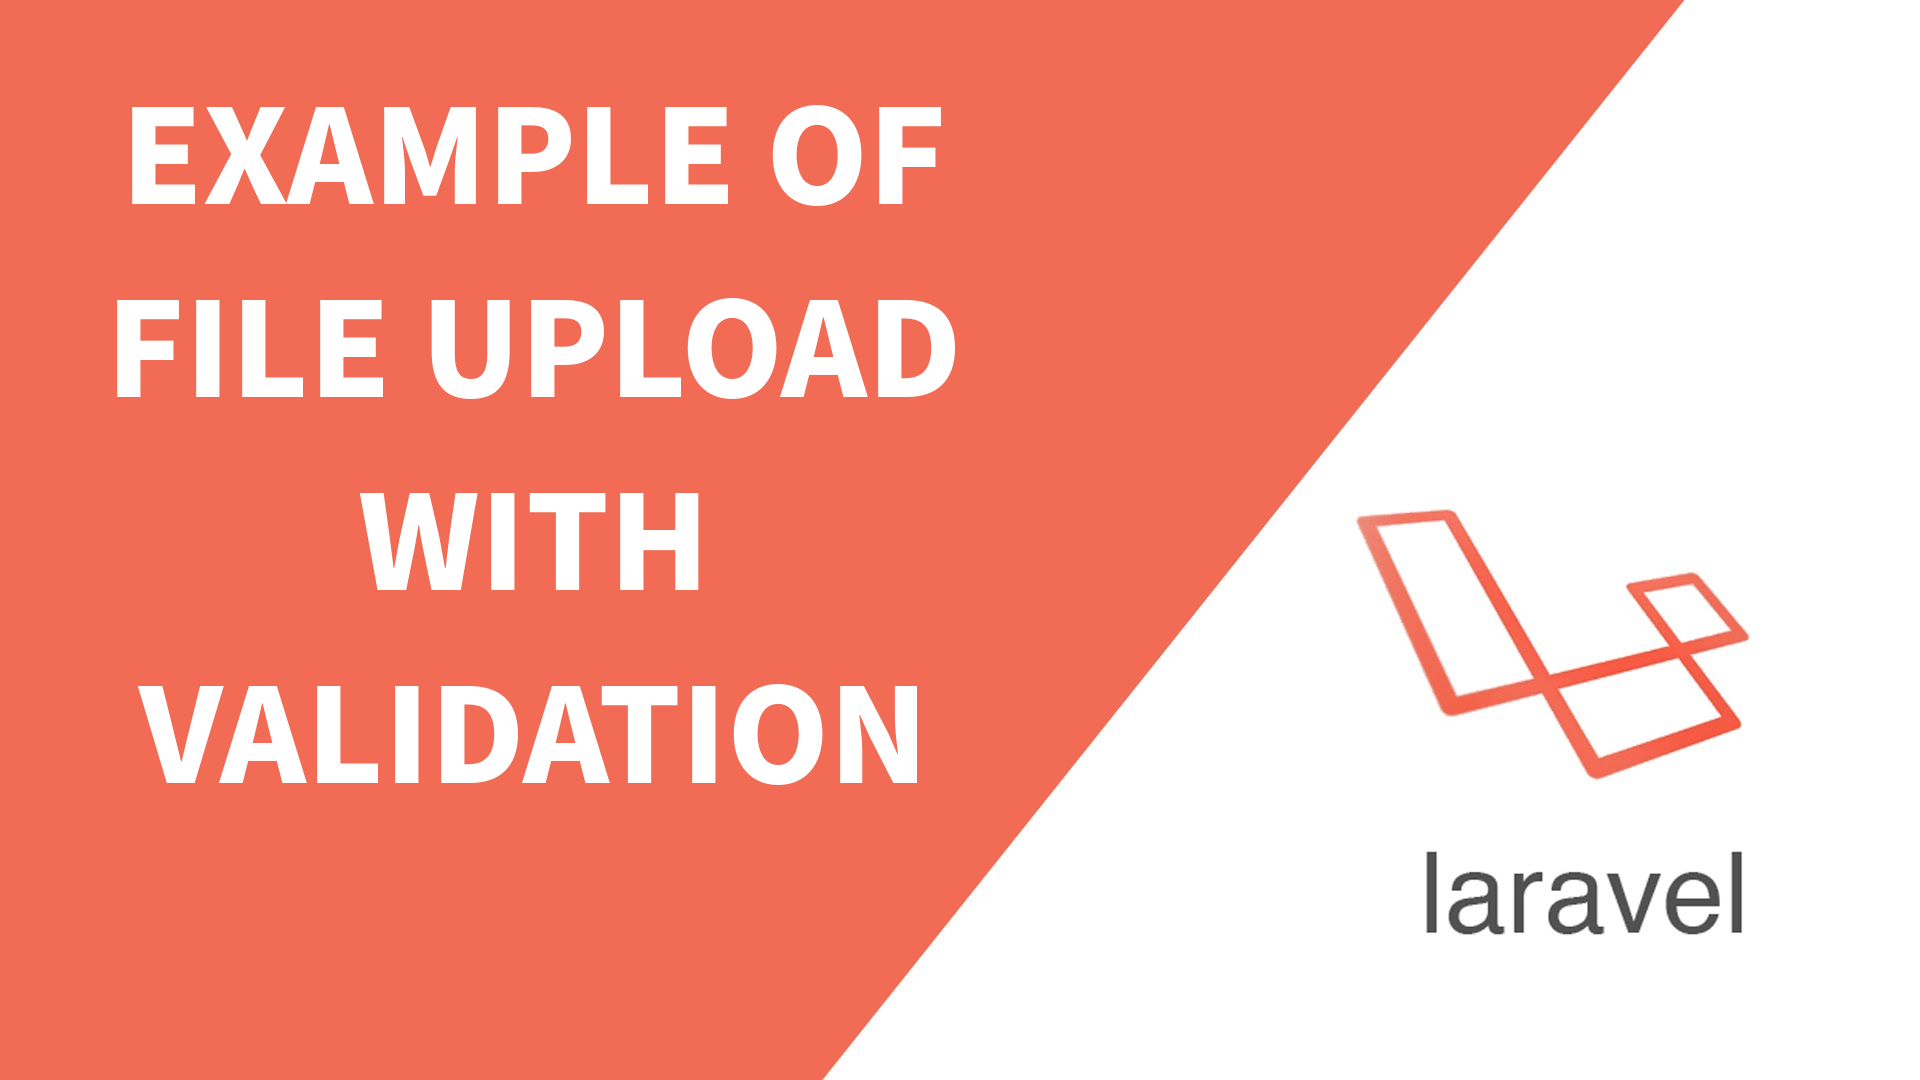 upload image in laravel – How to Upload images in Laravel 8?